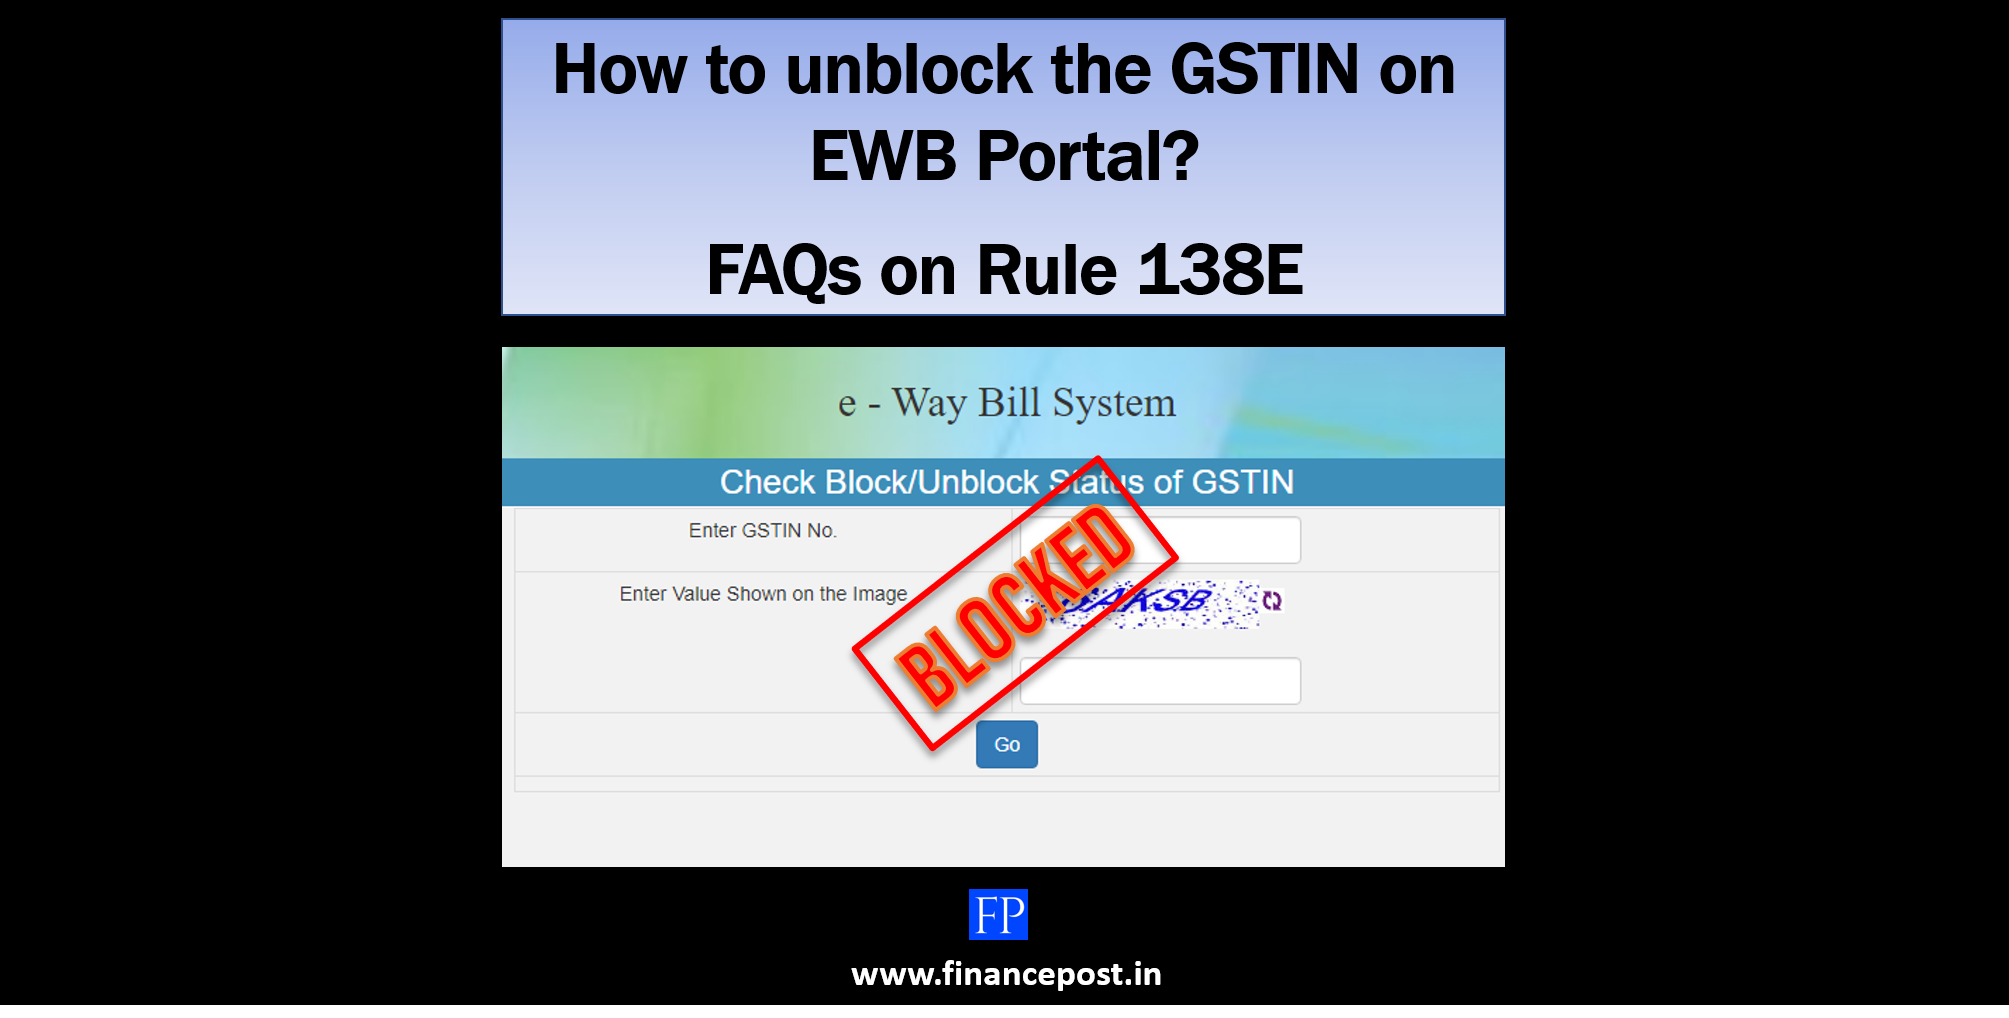 How to unblock the GSTIN on EWB Portal?